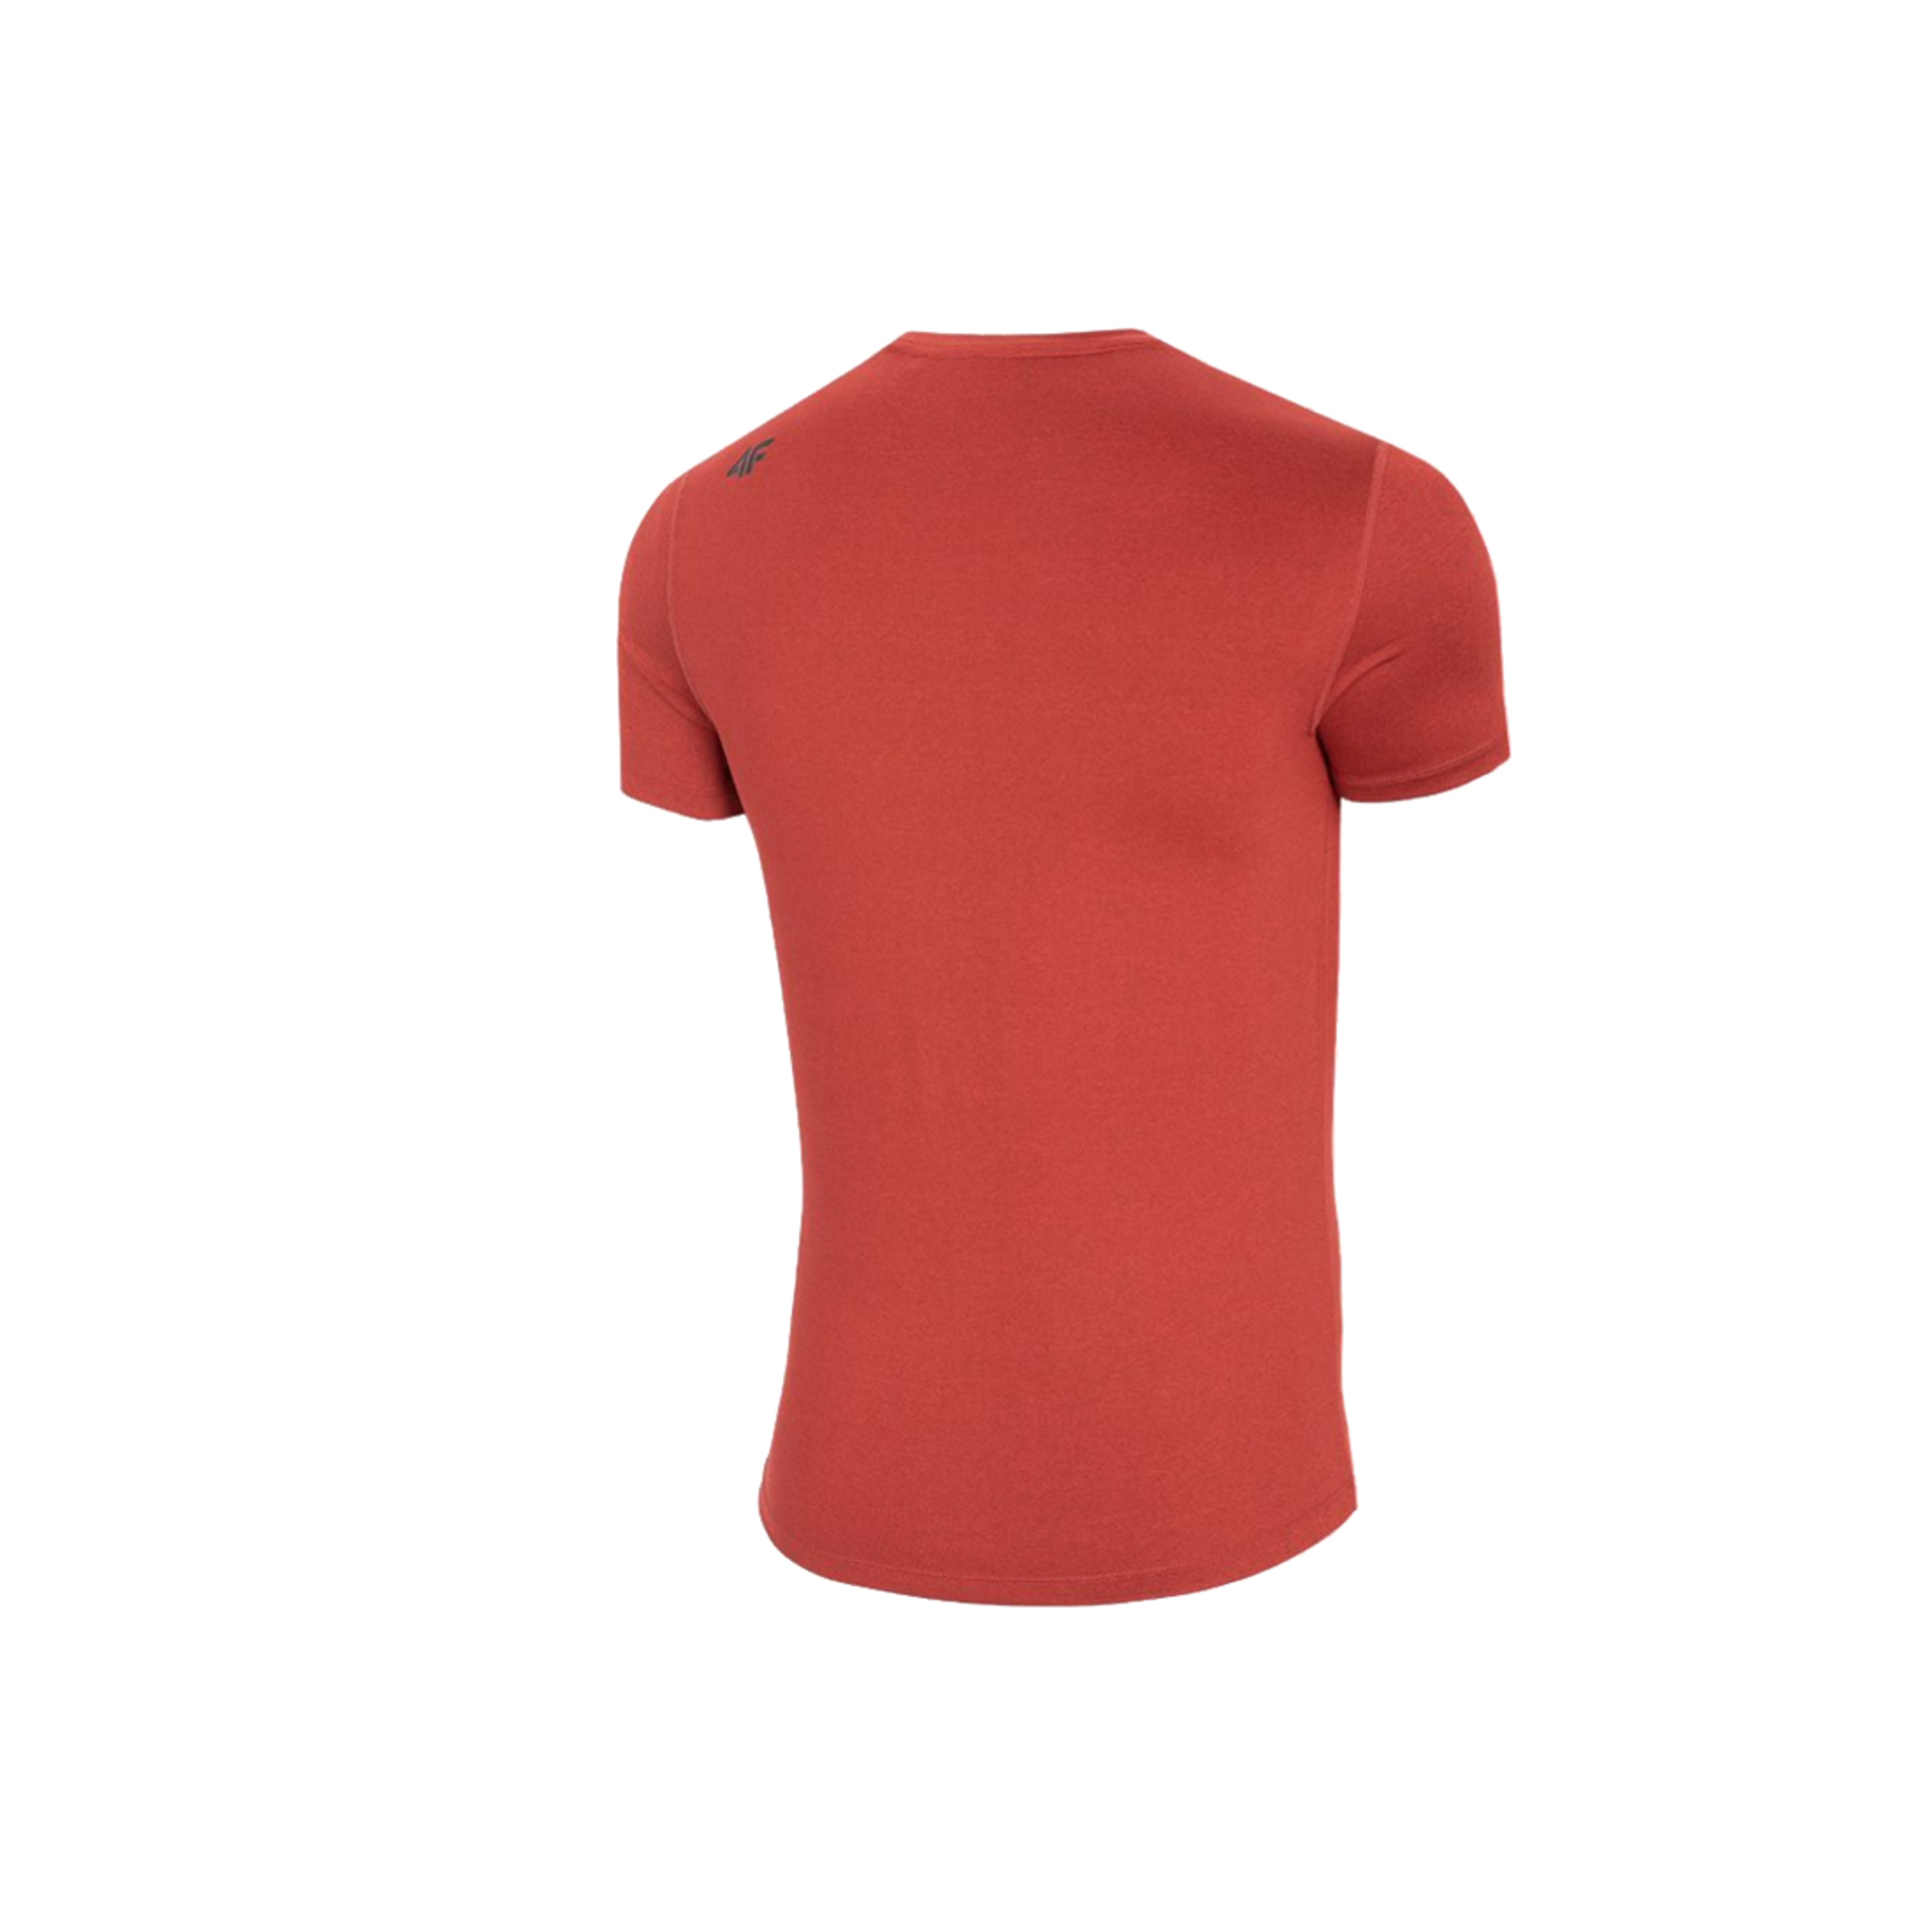 Camiseta 4f Clothes Nosh - rojo - Hombres, Rojo, Camiseta  MKP